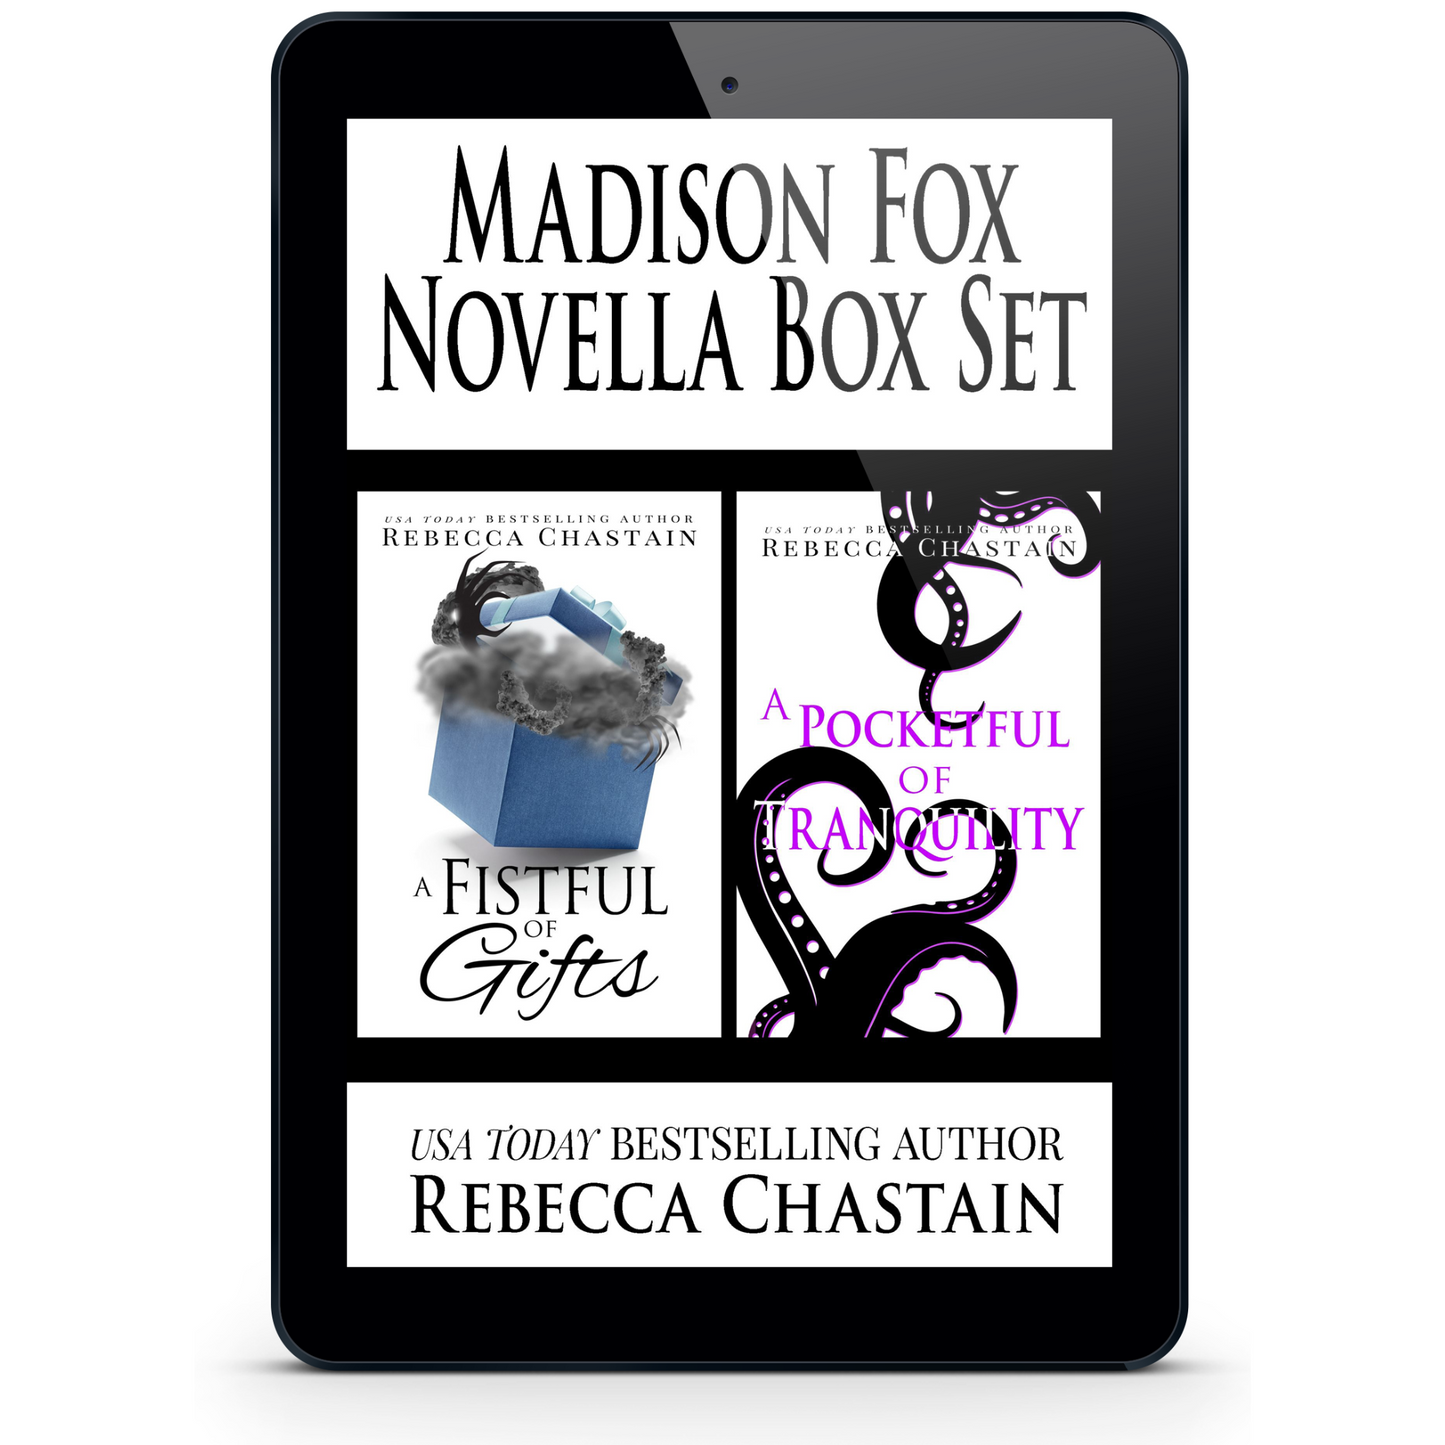 Madison Fox Novella Box Set